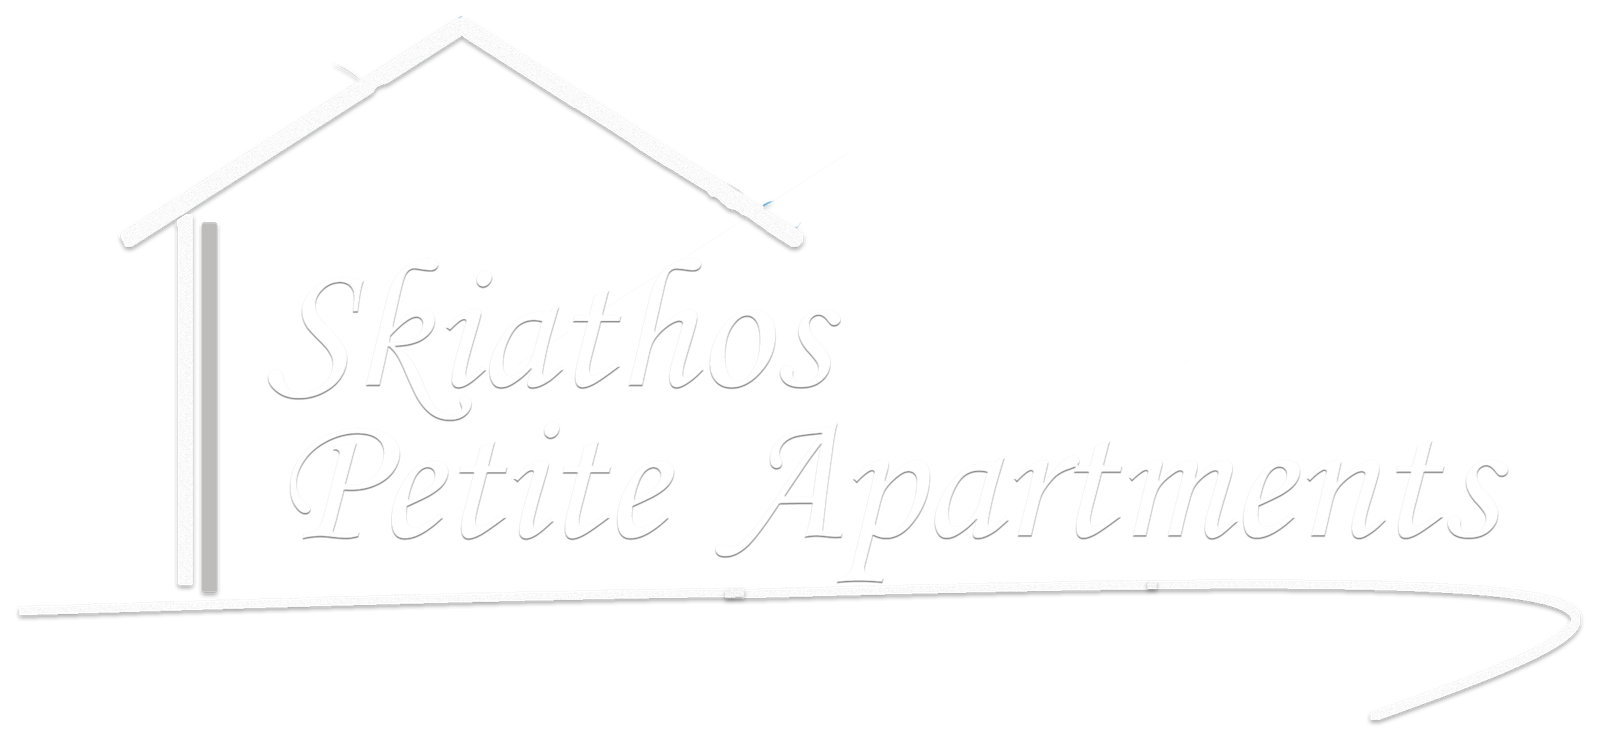 Skiathos Petite Apartments | Hotel Policies - Skiathos Petite Apartments